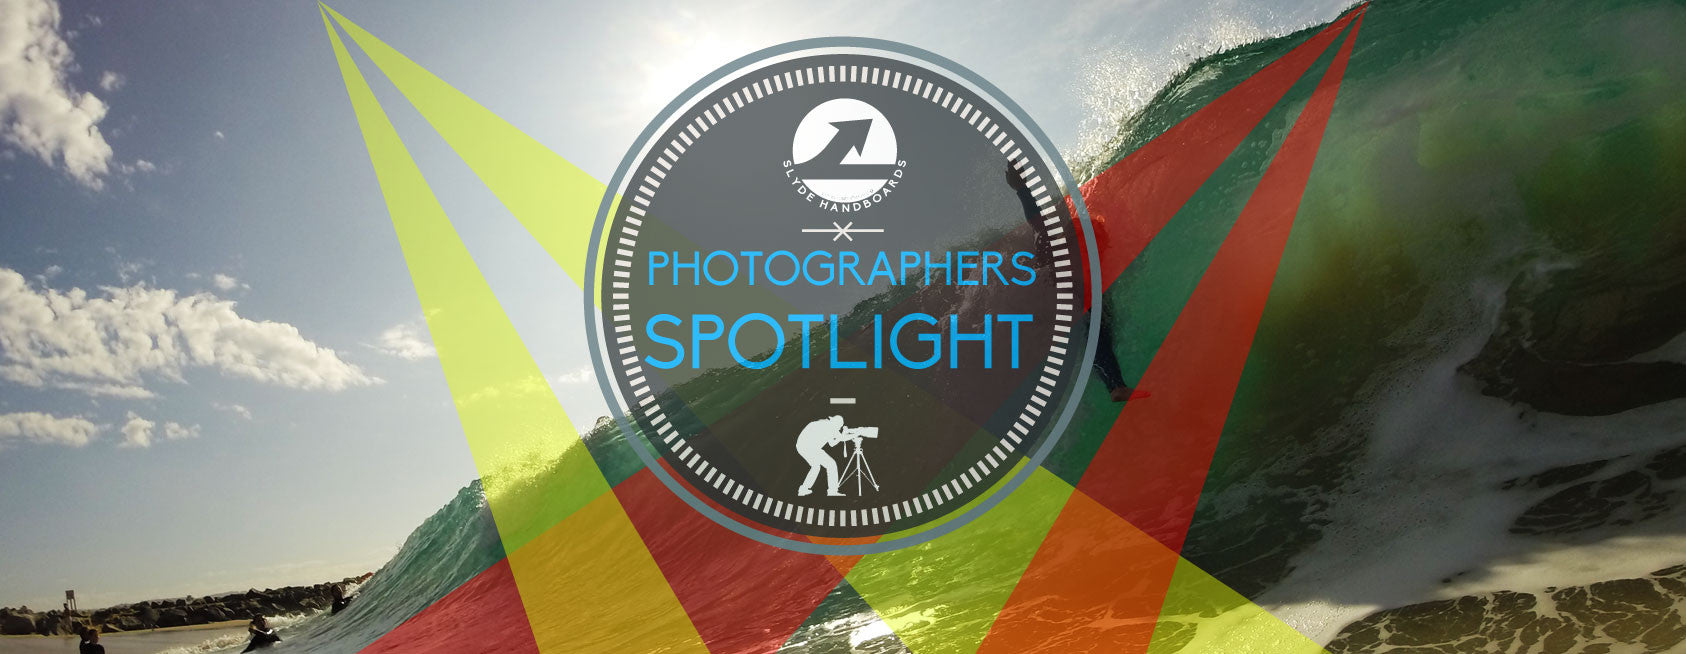 Photographers Spotlight Series: Behind the lens - Dylan Biggerstaff